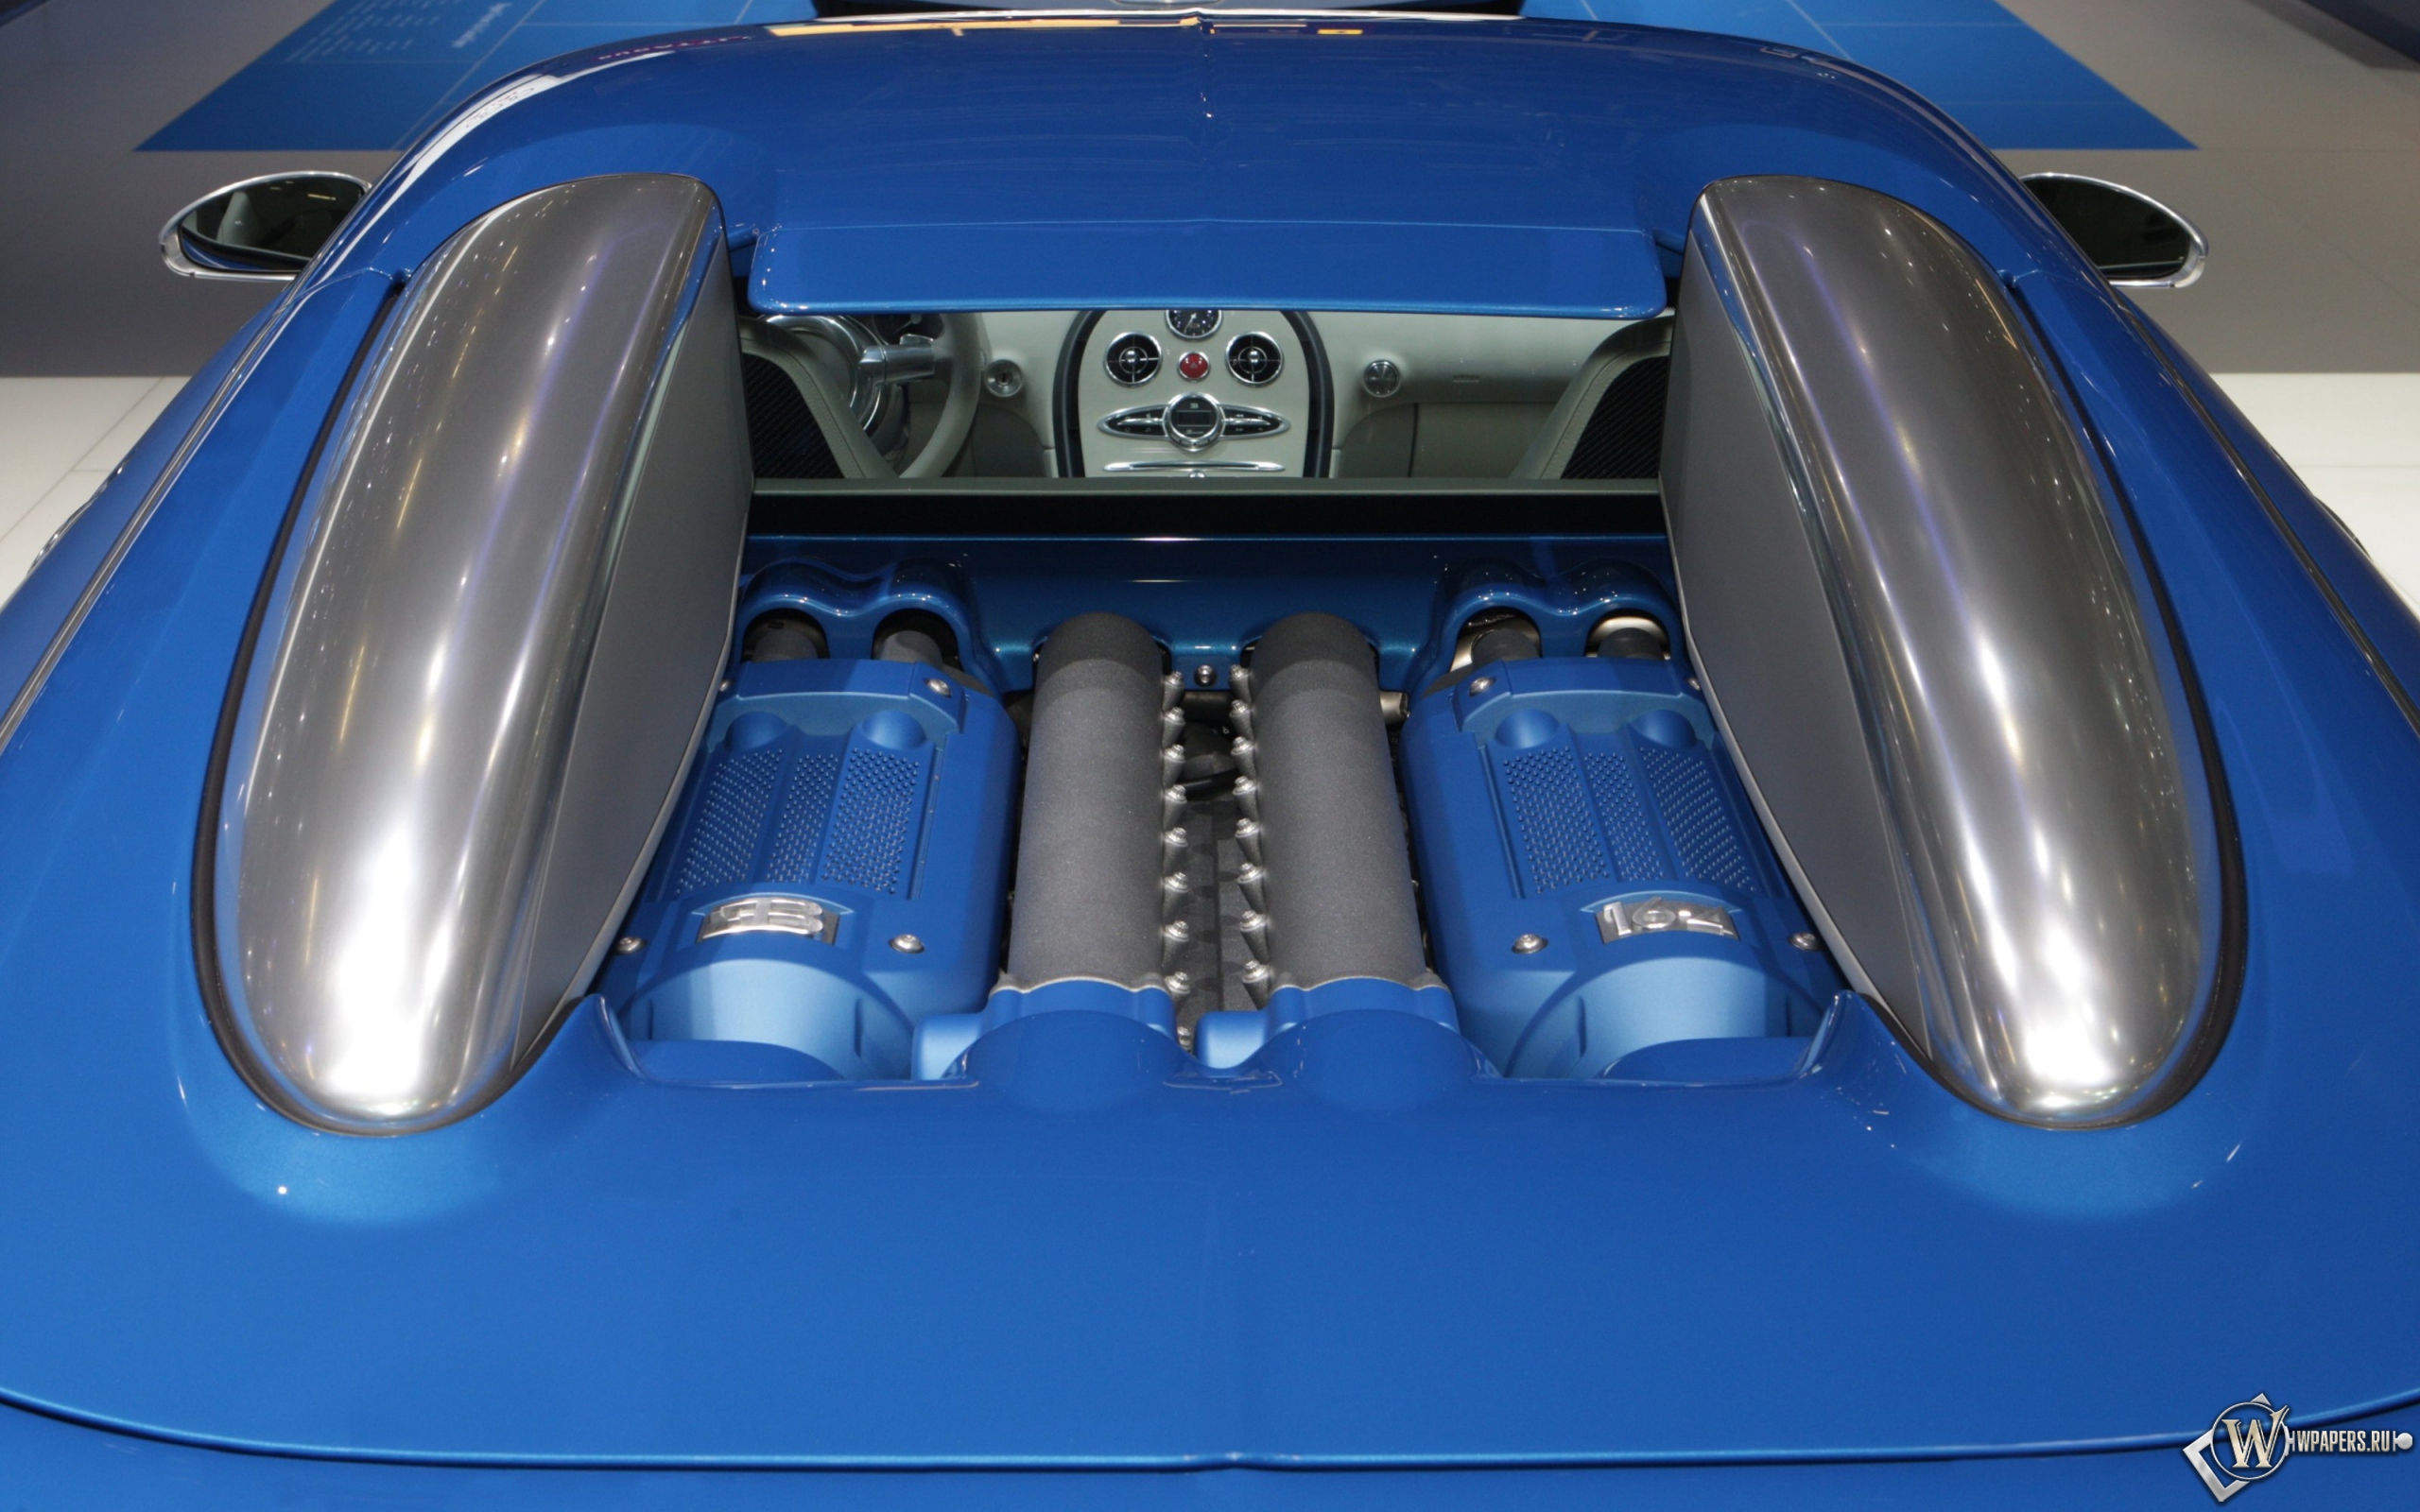 Bugatti Veyron Bleu Centenaire (2009) 2560x1600